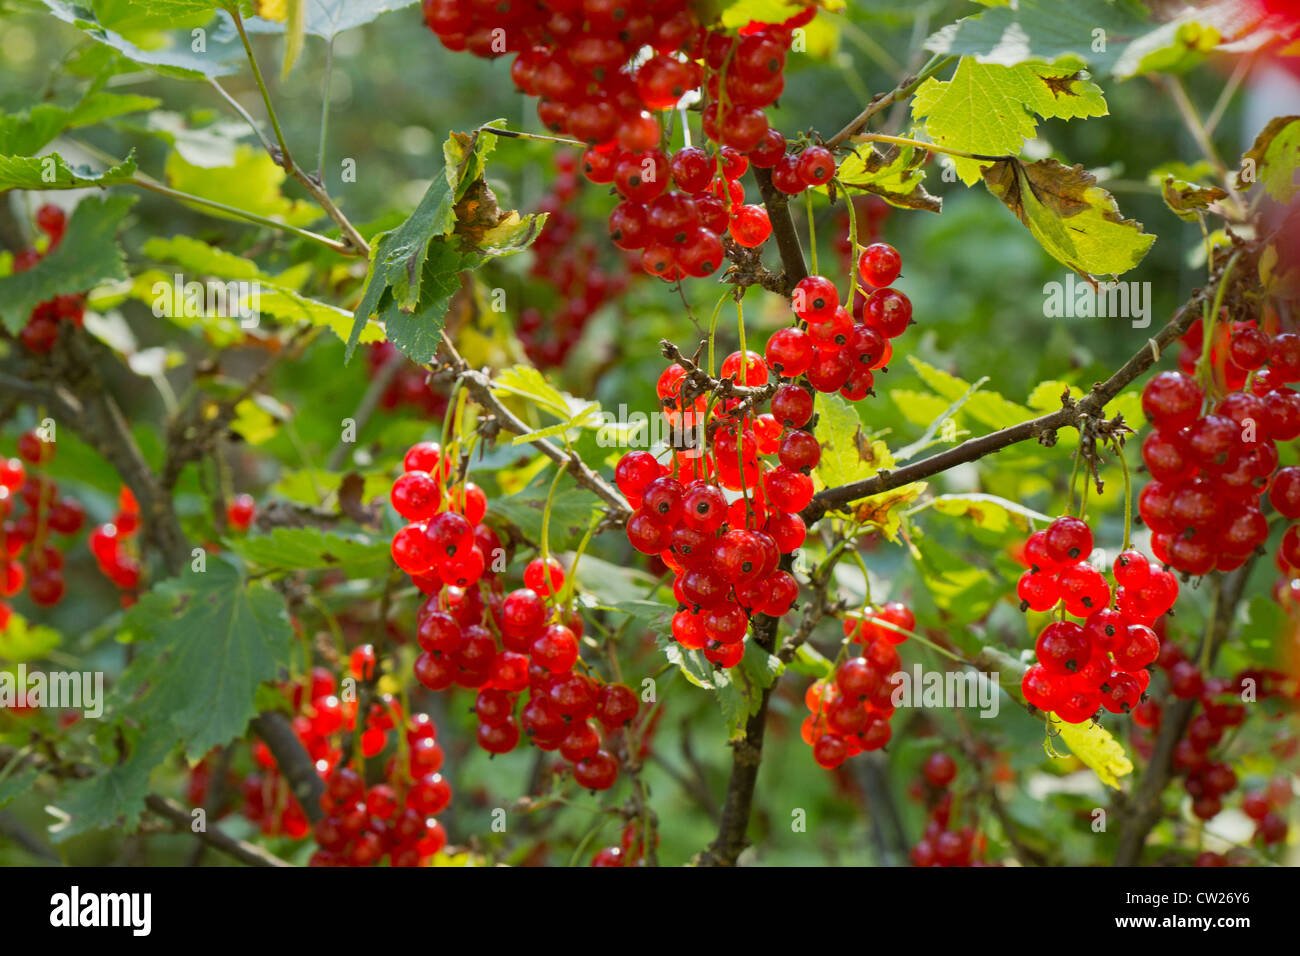 Plenty of ripe Redcurrant berries in a shrub Stock Photo